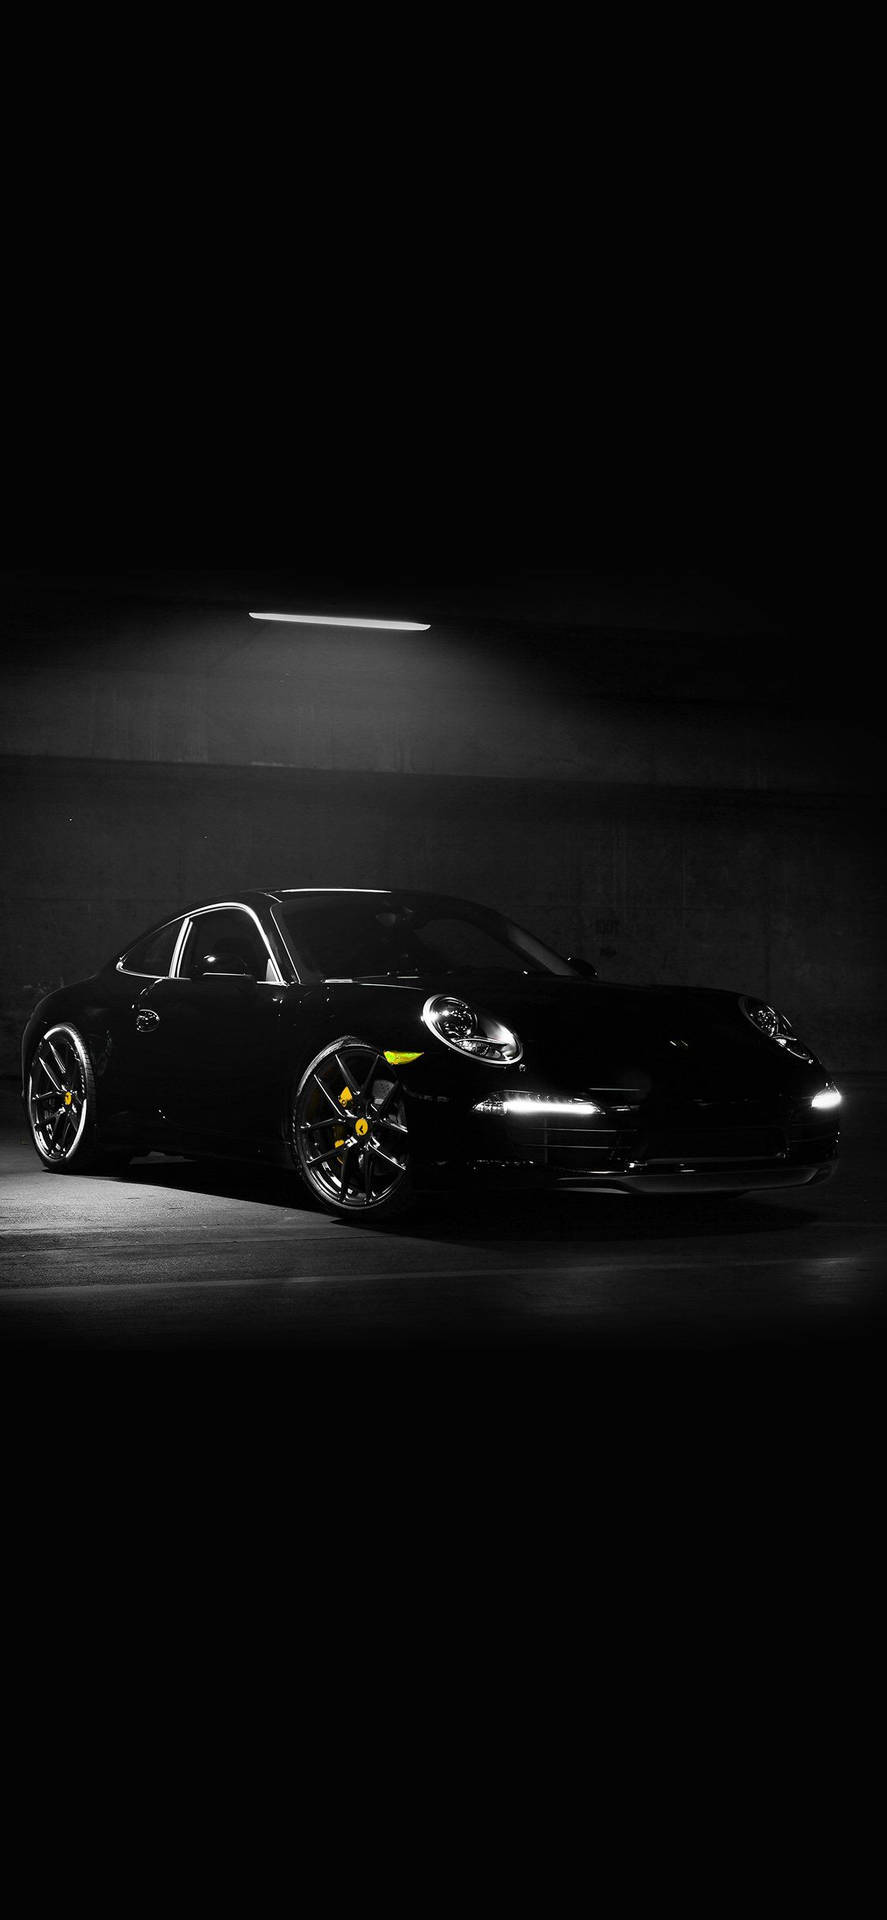 iPhone X Car Black Porsche Wallpaper